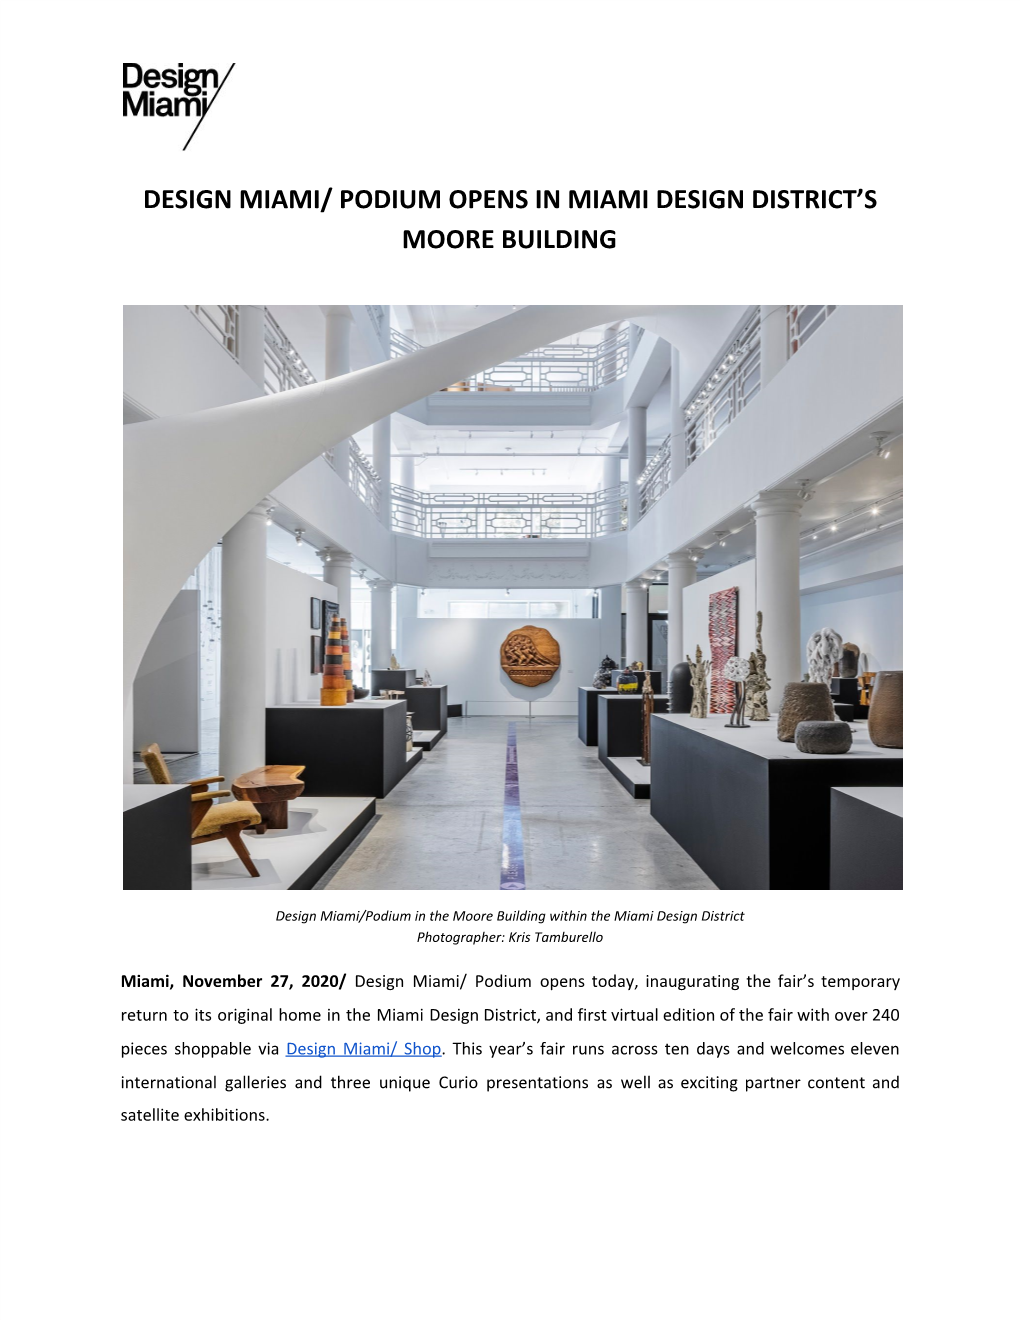 Podium Opens in Miami Design District's Moore Building